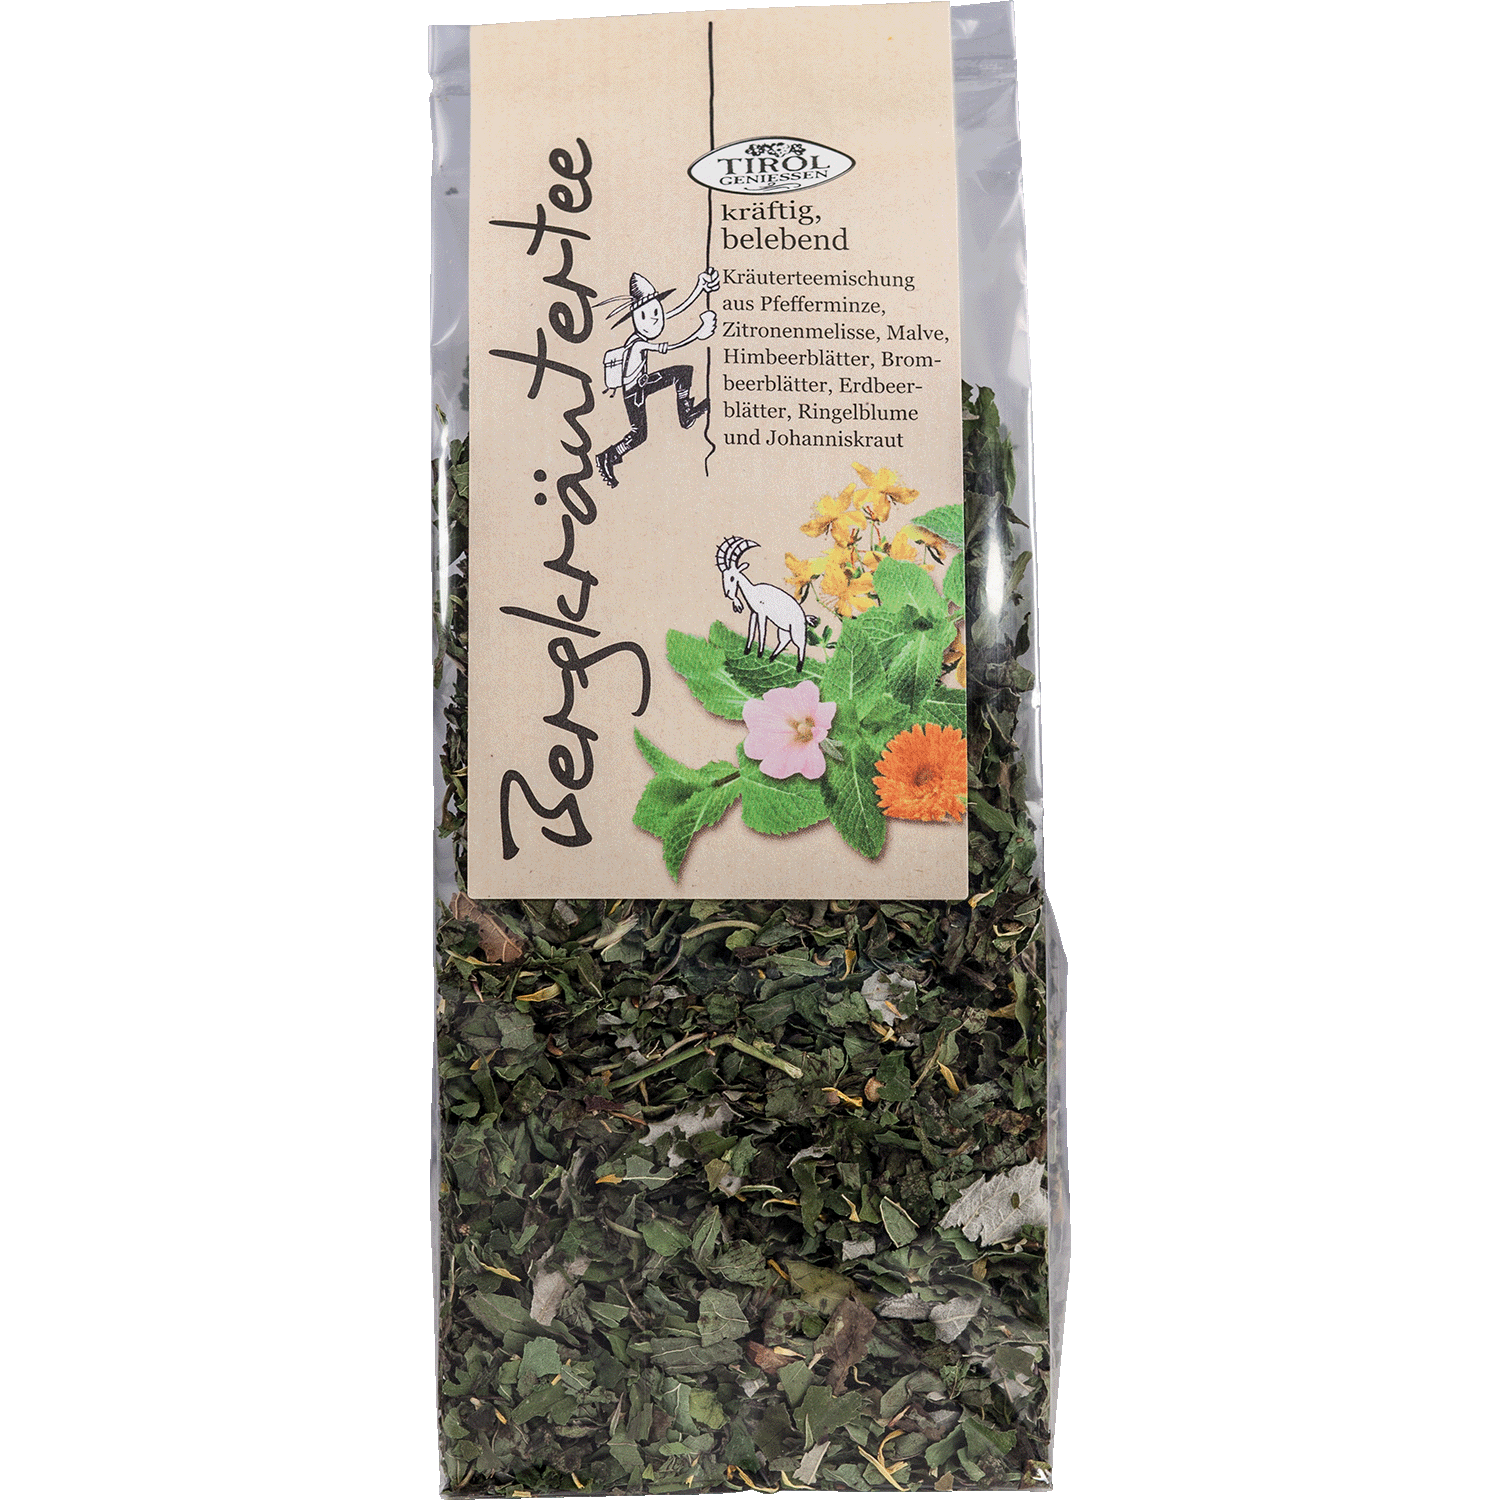 Mountain Herbal Tea from Austria from Tirol Geniessen